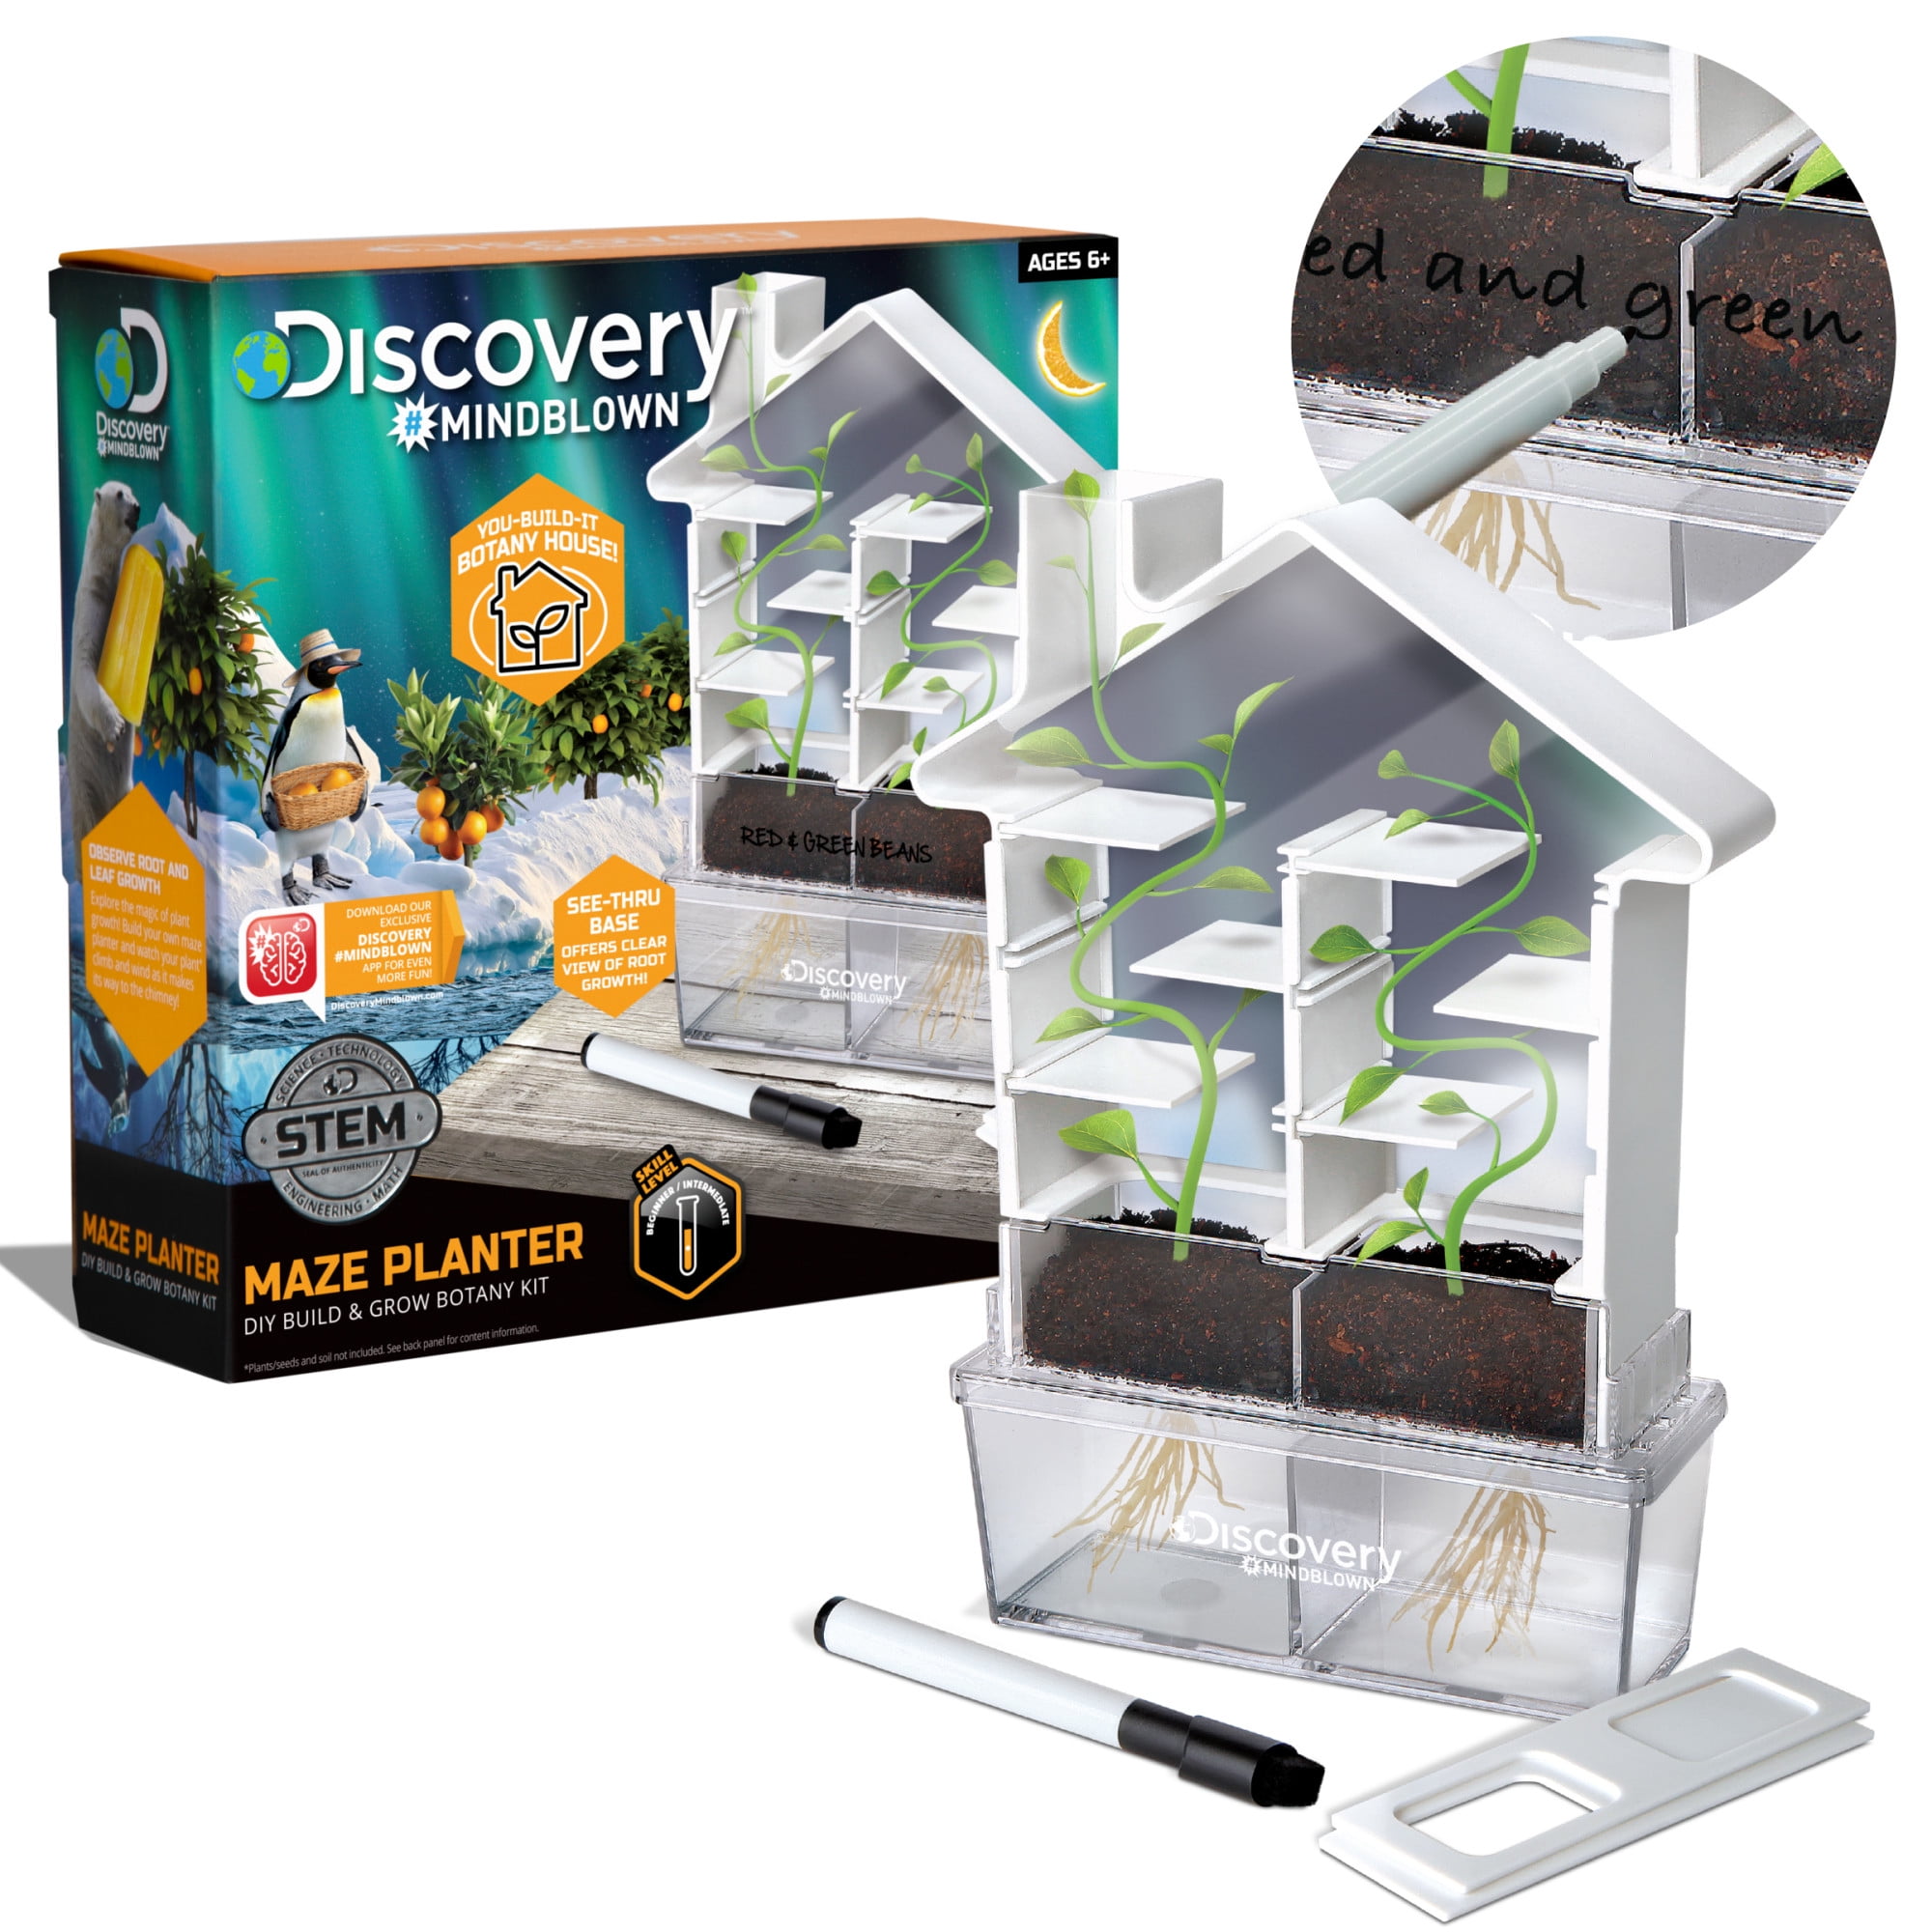 Discovery Mindblown Maze Planter Stem DIY Build & Grow Botany Kit Ages 6+ 